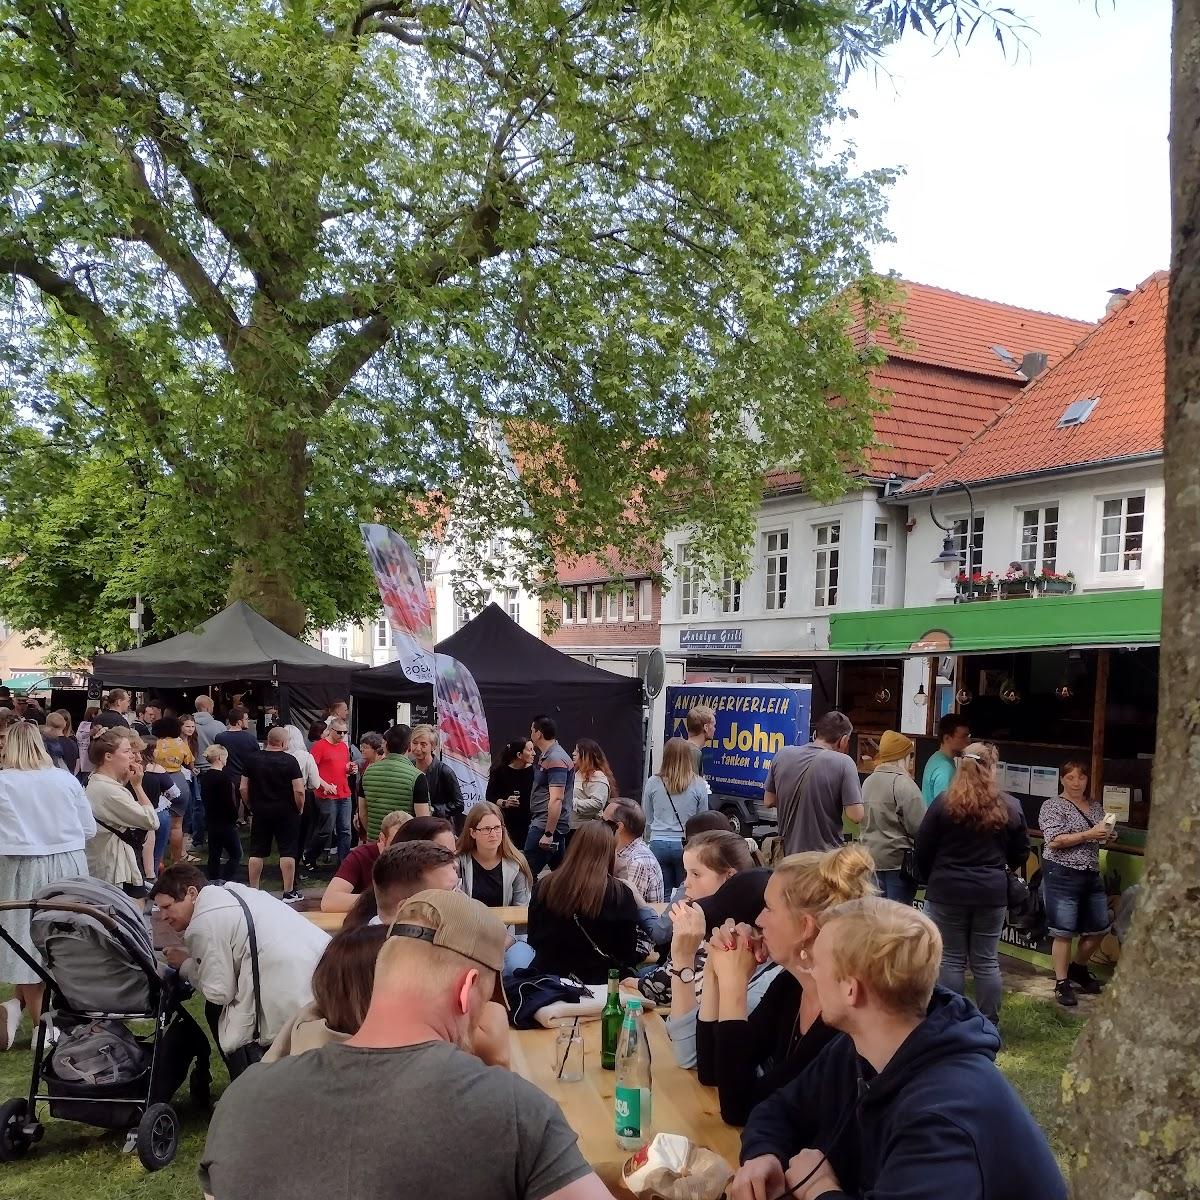 Restaurant "Foodtruck Festival" in Jever